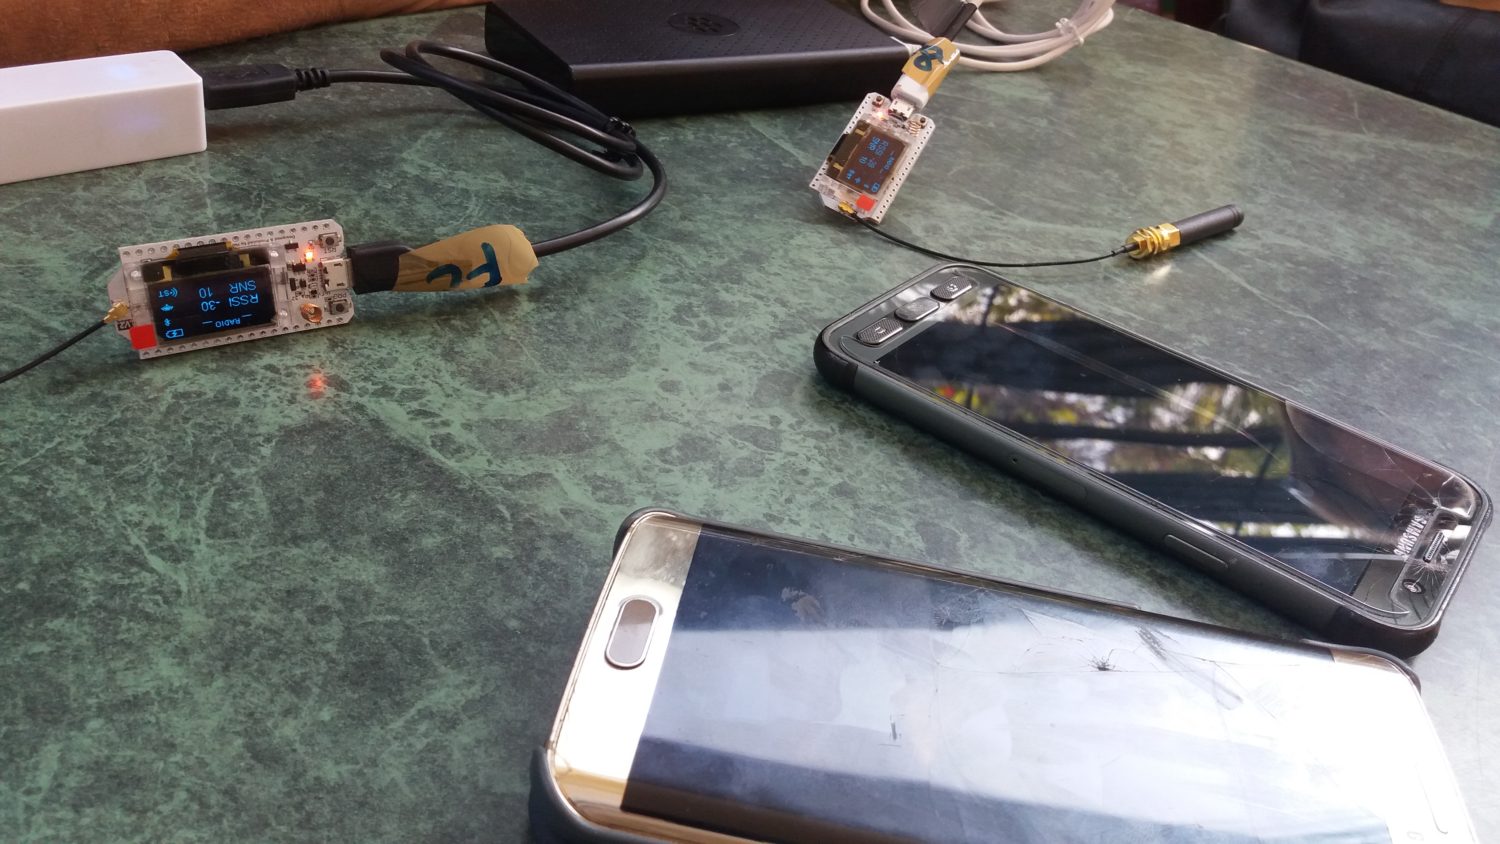 Venezuelans Made Lightning-Savvy Hardware To Use Bitcoin During Blackouts